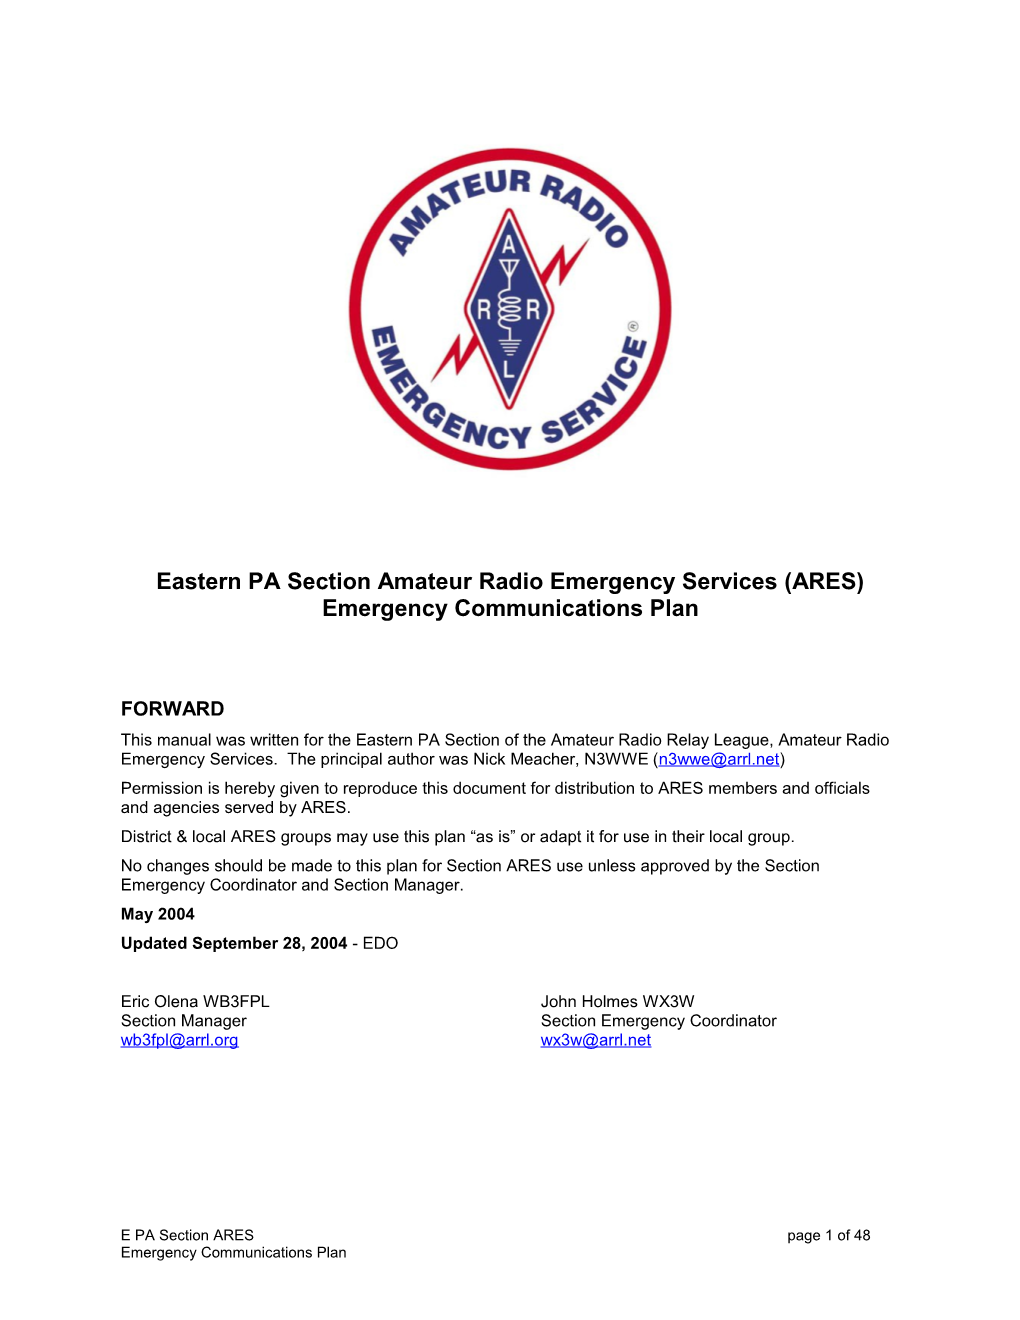 EPA Section Emergency Plan V2